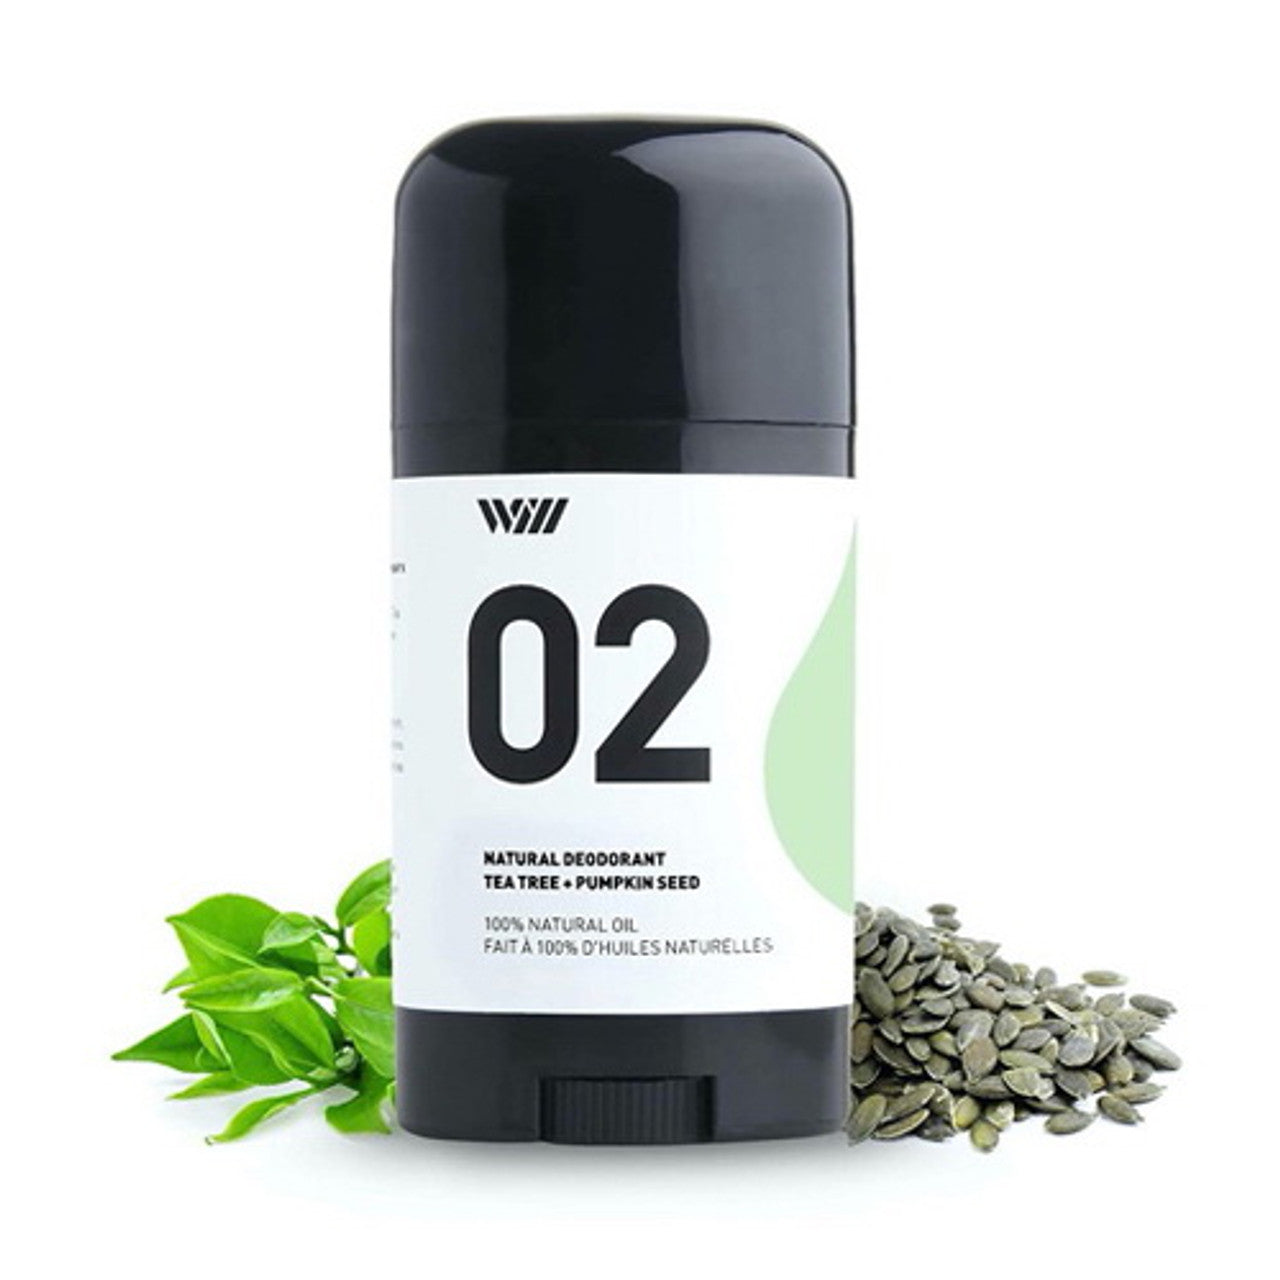 Way Of Will 02 Natural Deodorant Tea Tree and Pumpkin Seed, 2.65 Oz